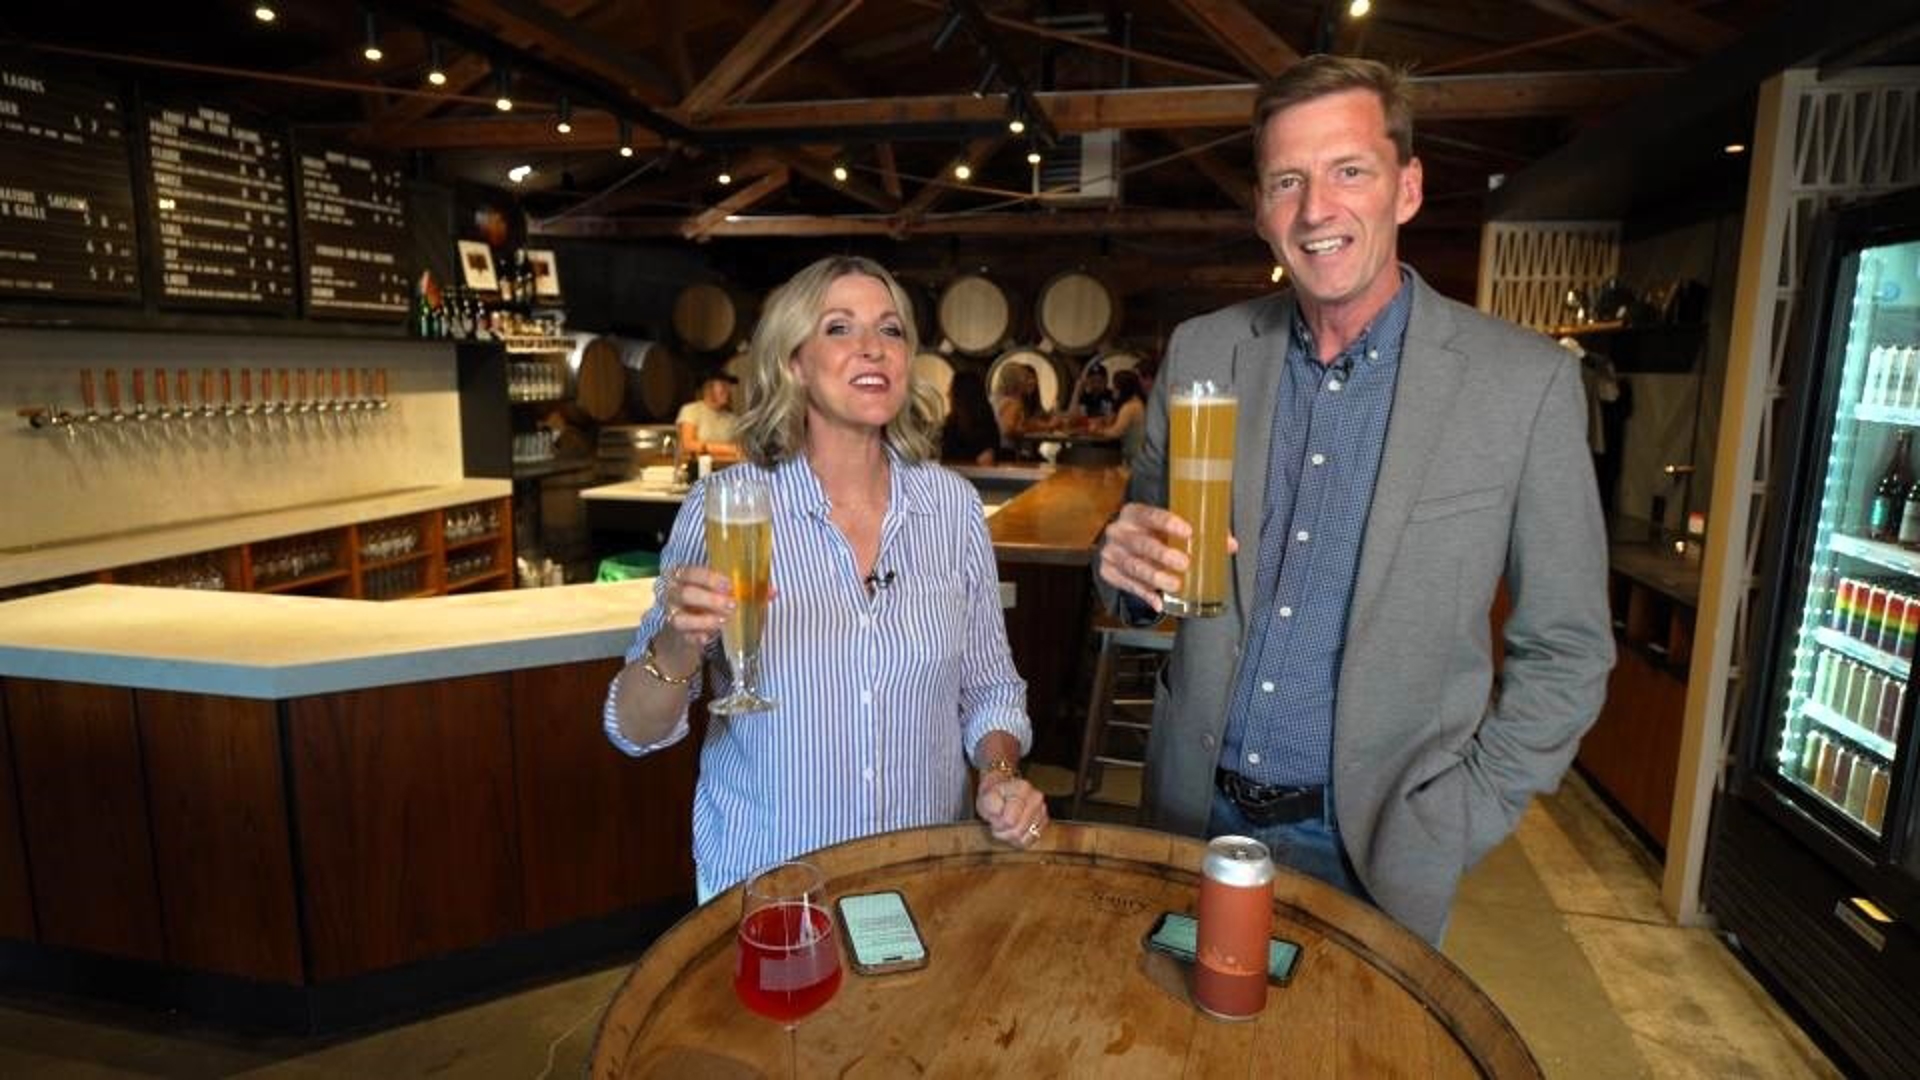 The Ballard brewery produces award-winning saisons and lagers. #k5evening